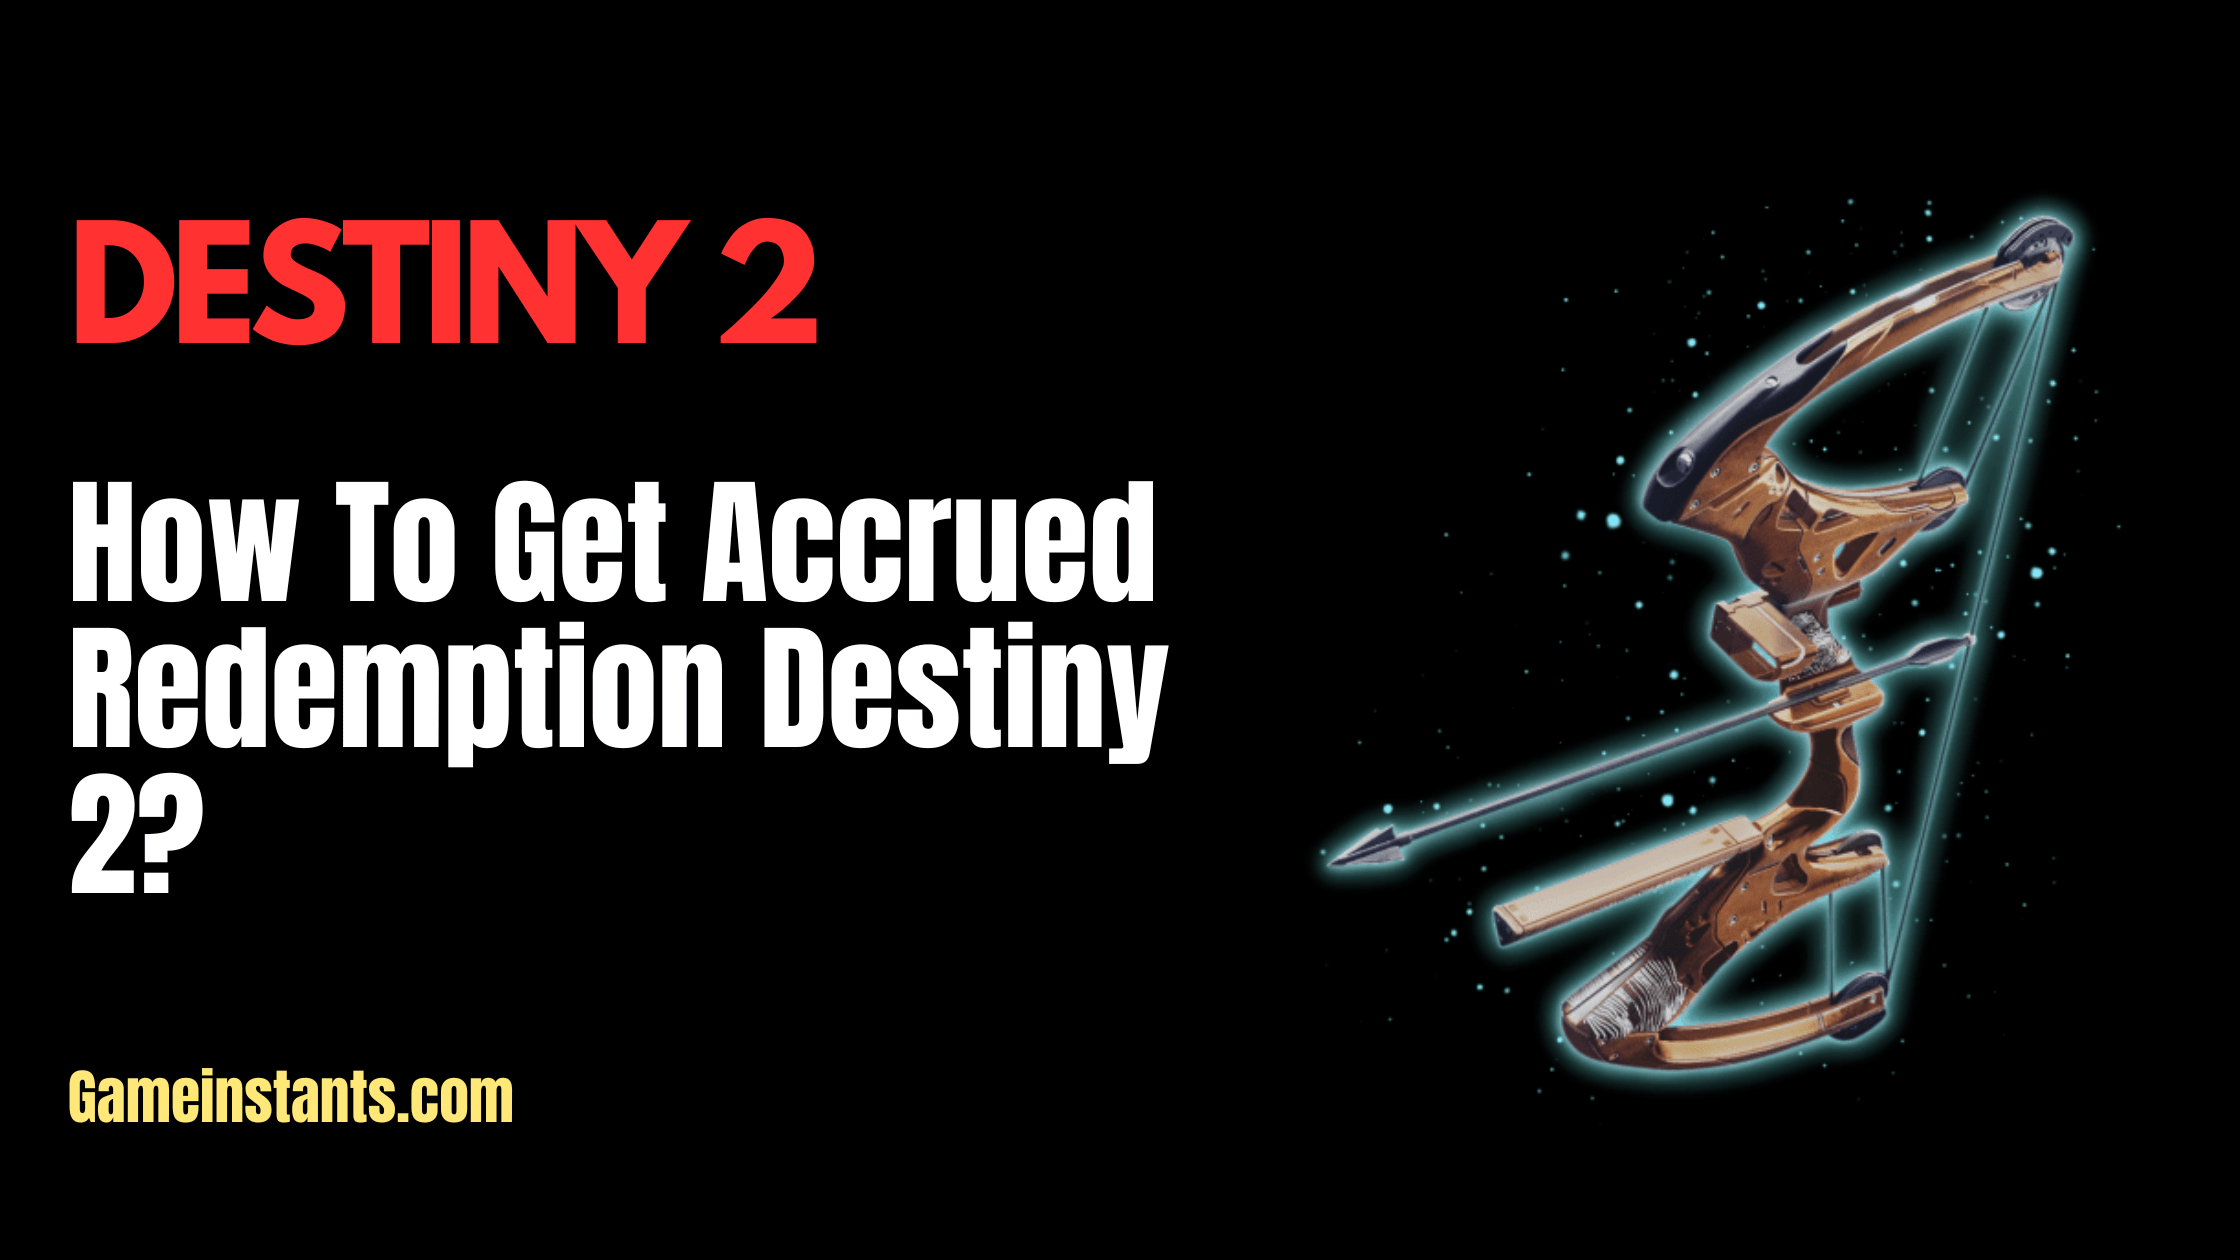 Accrued Redemption Destiny 2